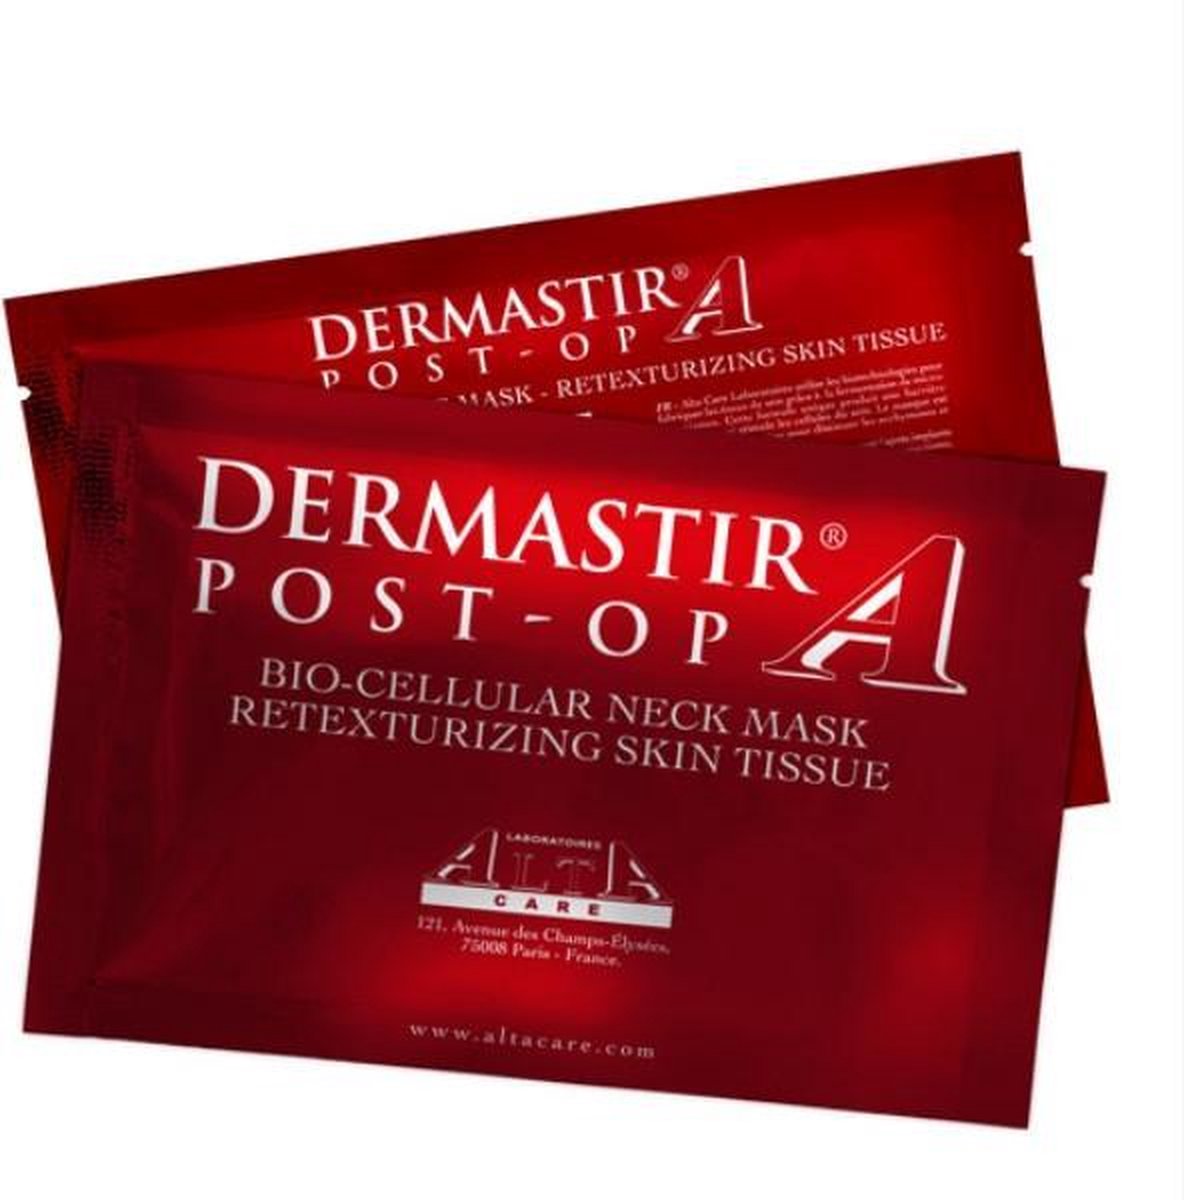 Dermastir Post-Op Bio-Cellular Retexturizing Mask – Neck 22ml